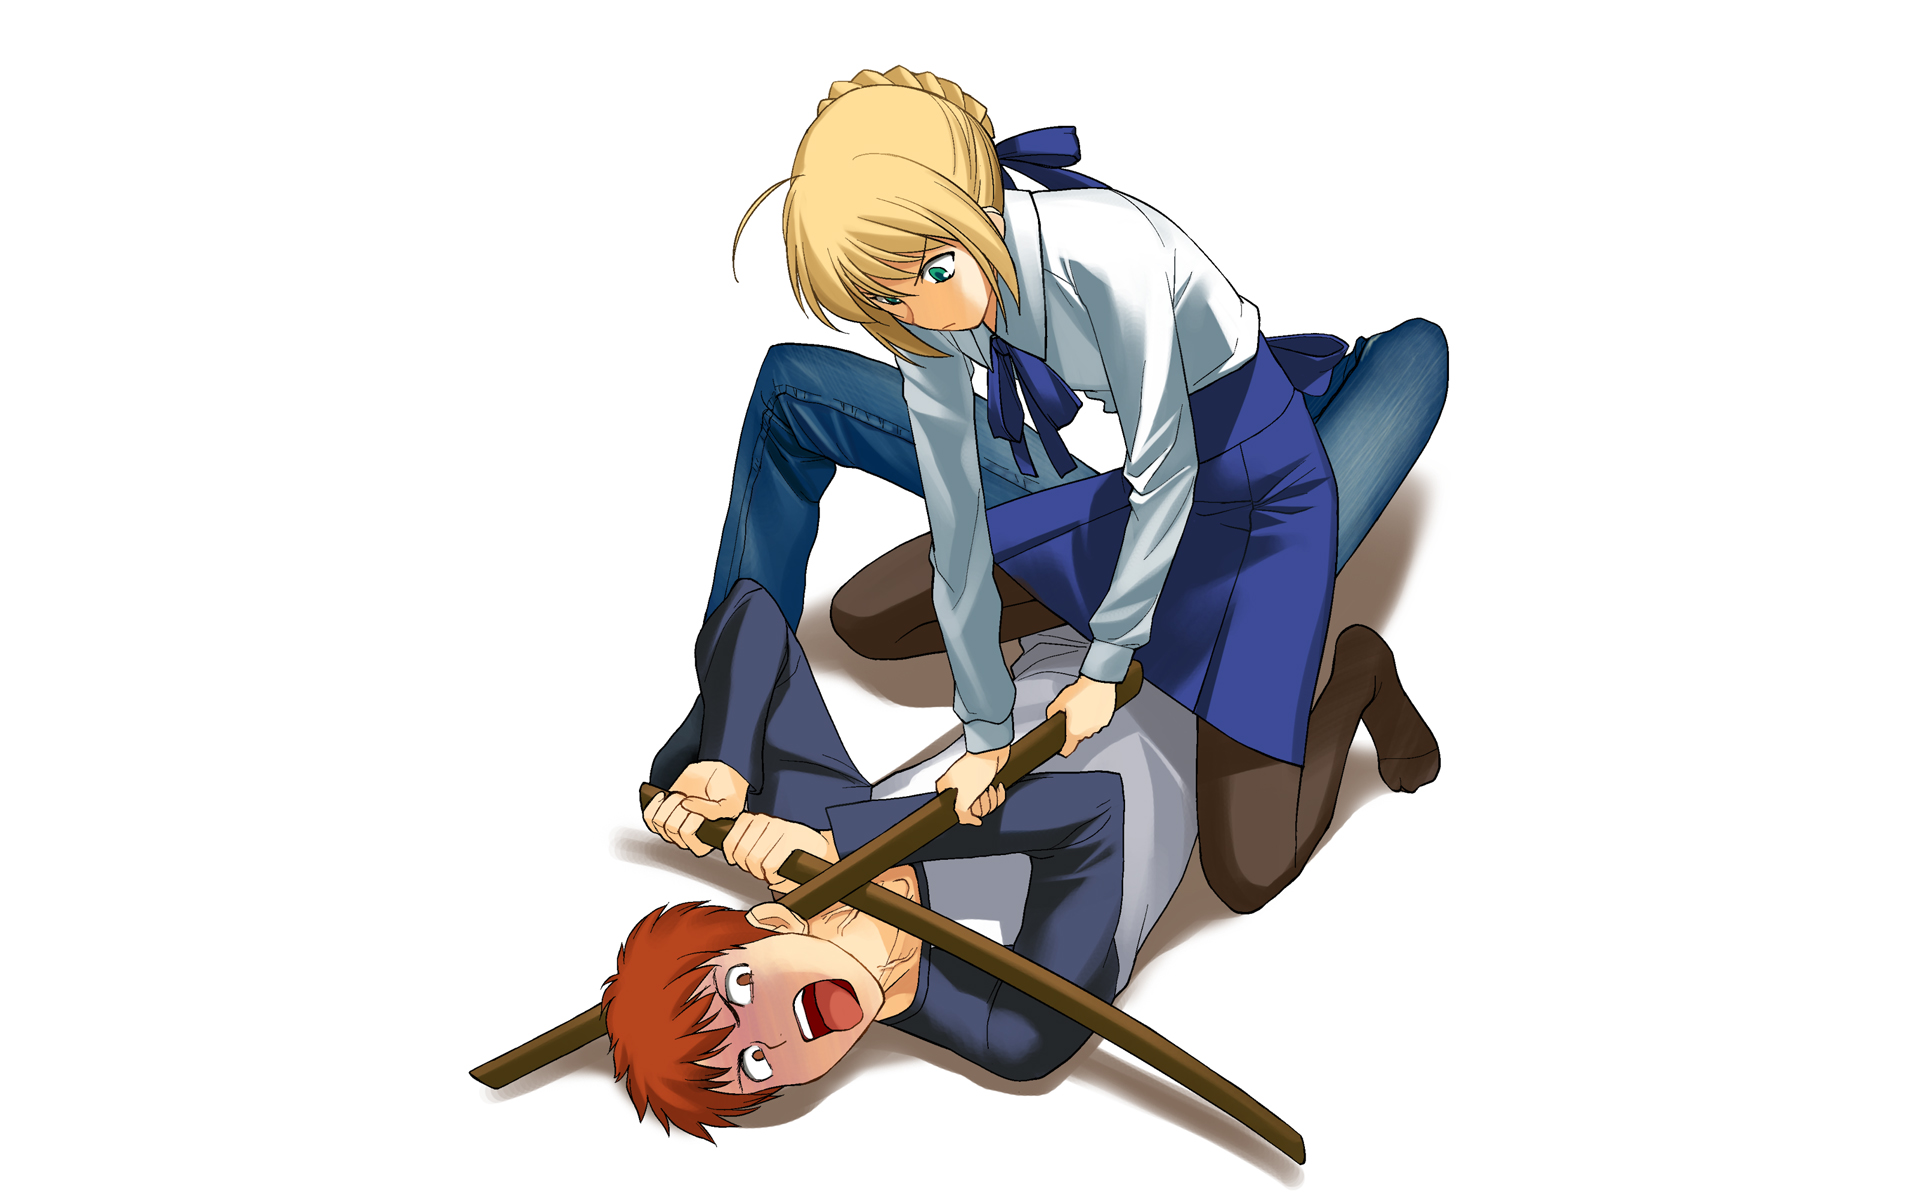 anime girl and boy fighting